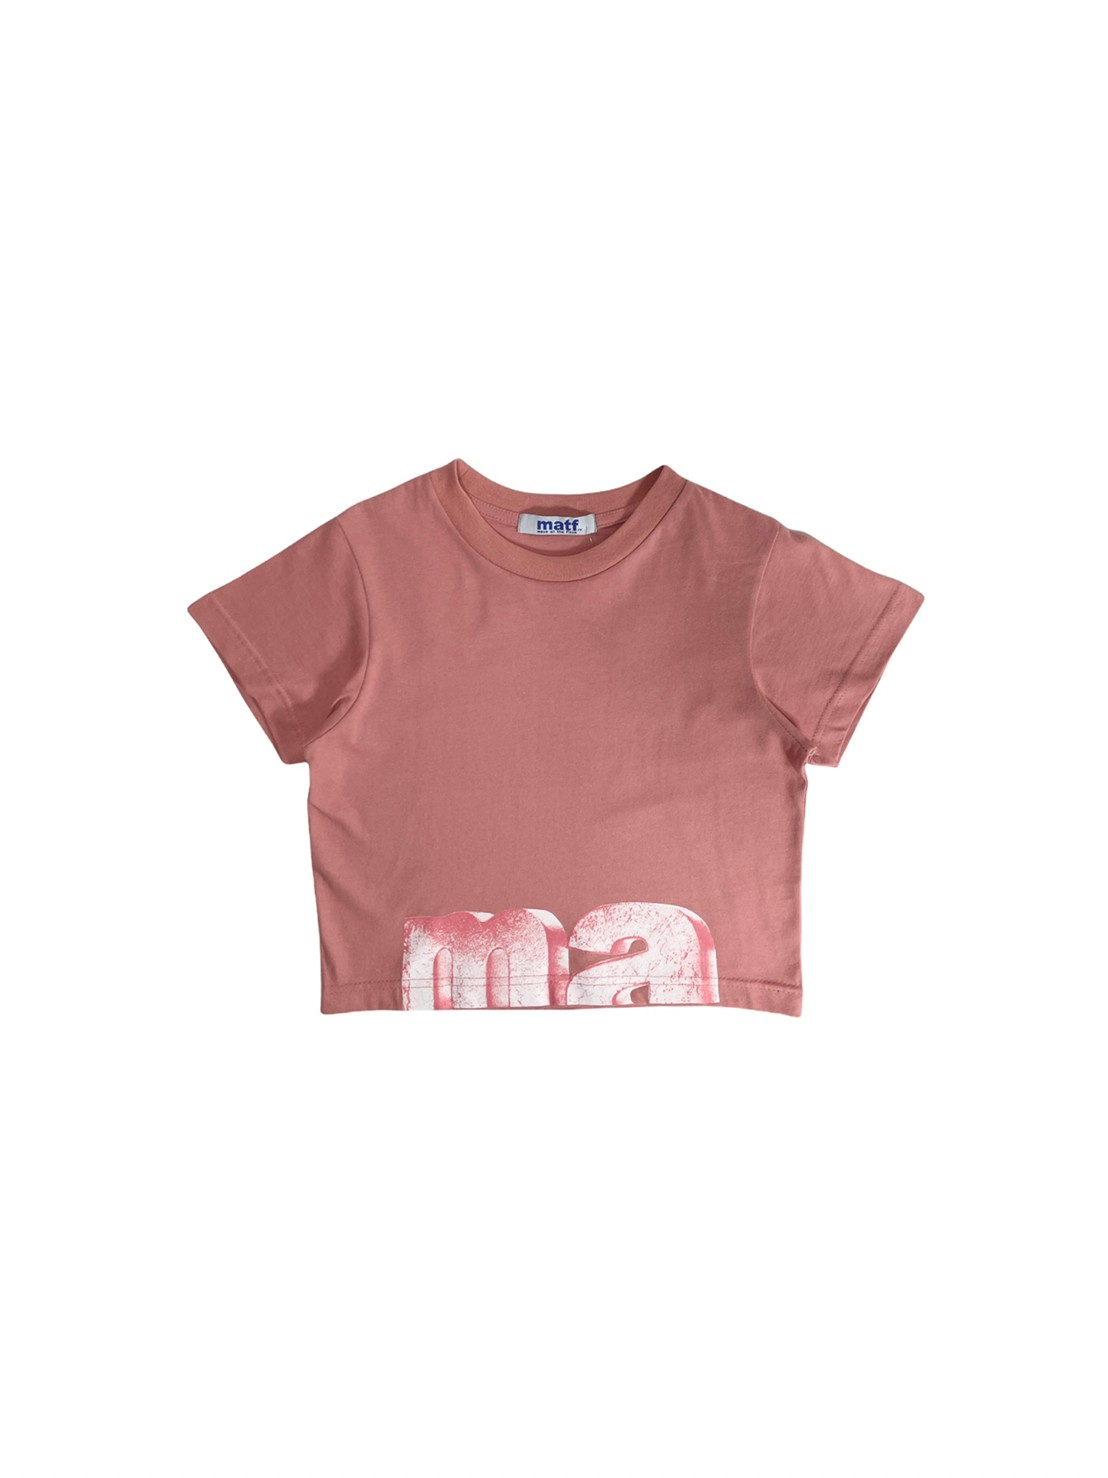 Matf *shift* crop top t-shirt (rose pink)